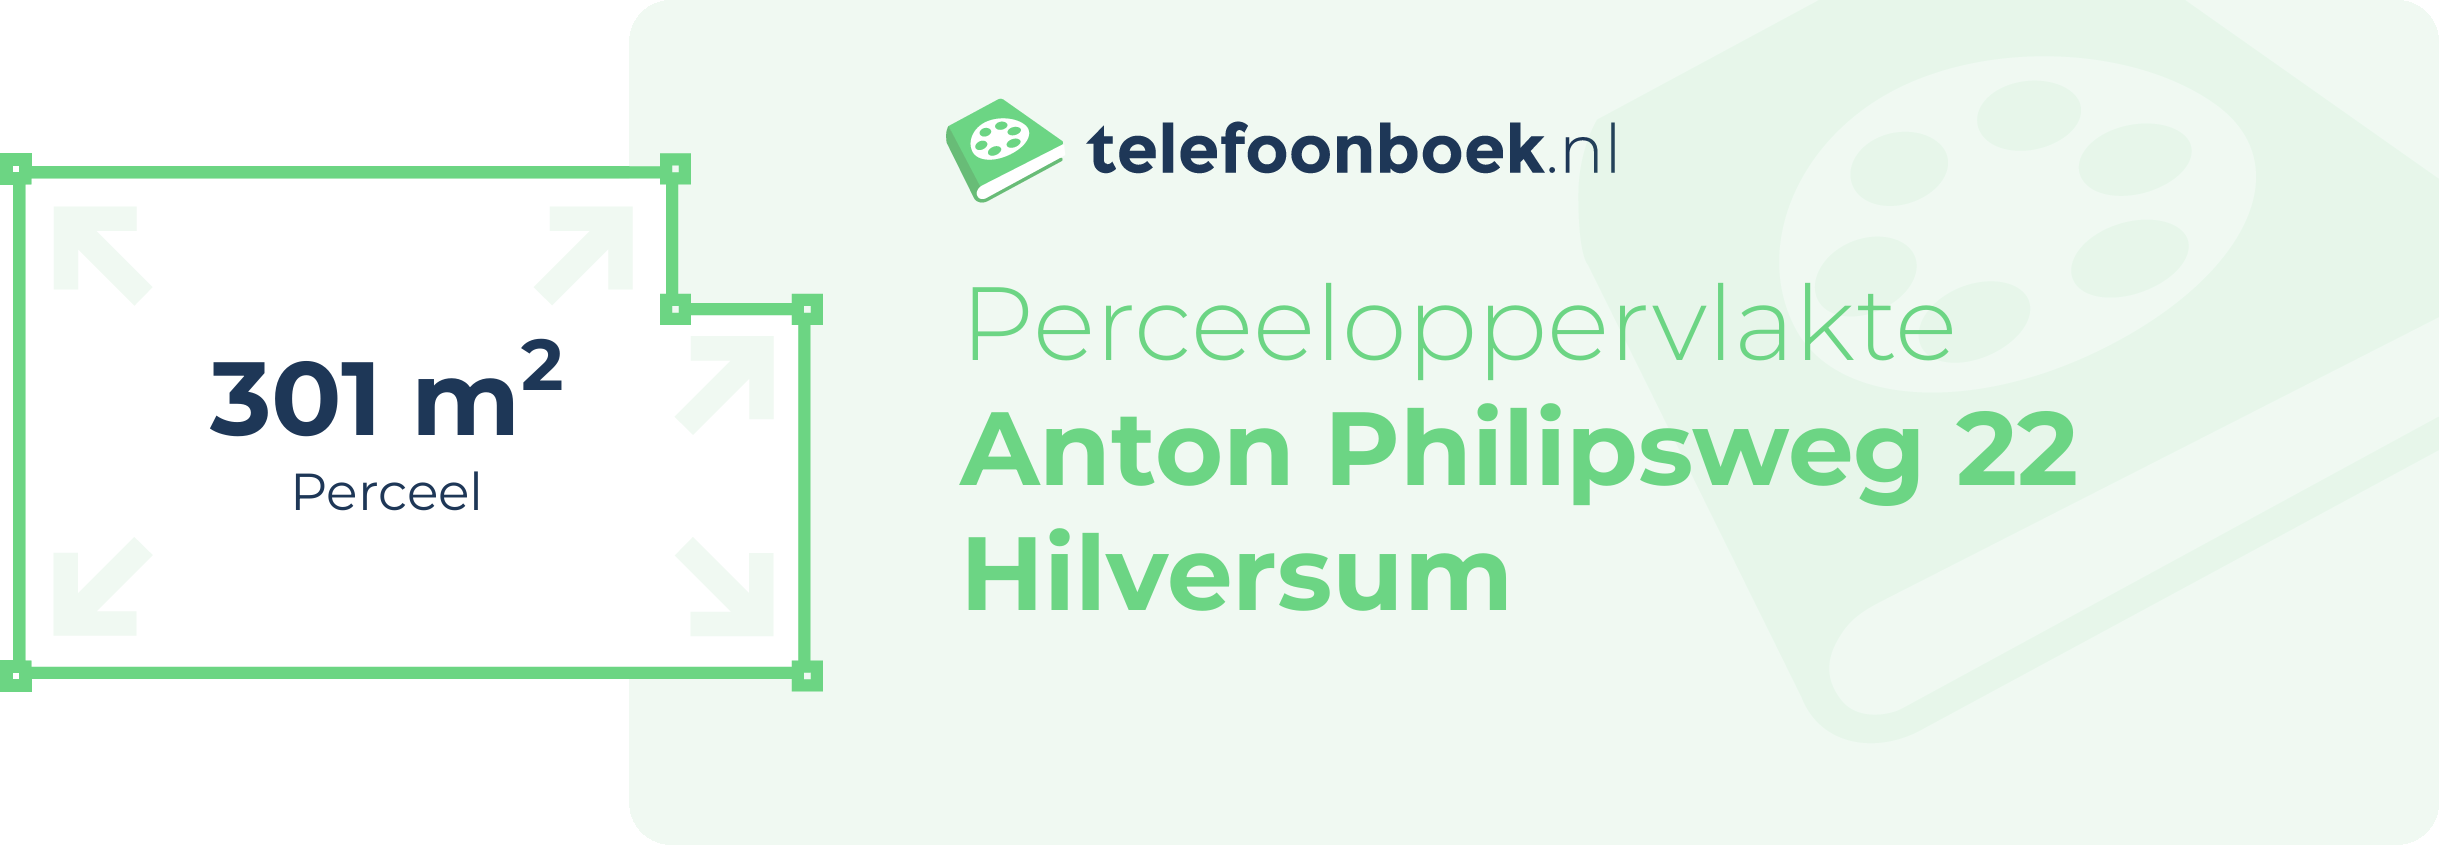 Perceeloppervlakte Anton Philipsweg 22 Hilversum